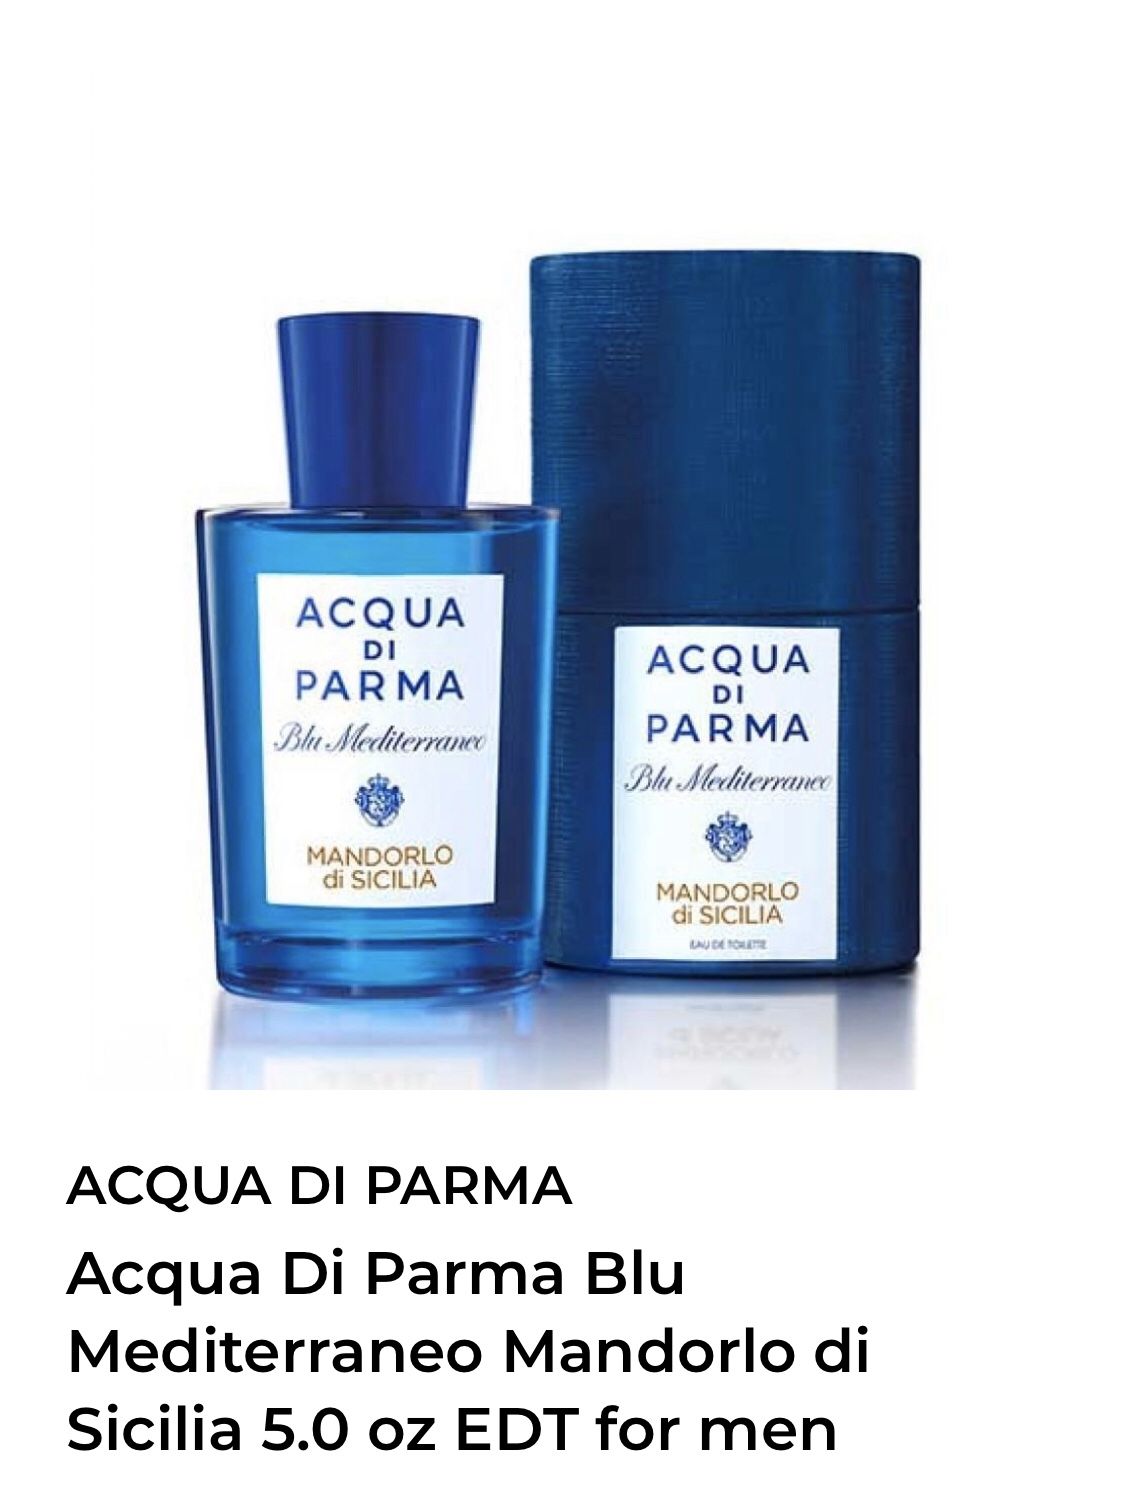 FRAGRANCE ACQUA DI PARMA 5.O oz I have one of each MEDITERRANEO ITALY Parfume